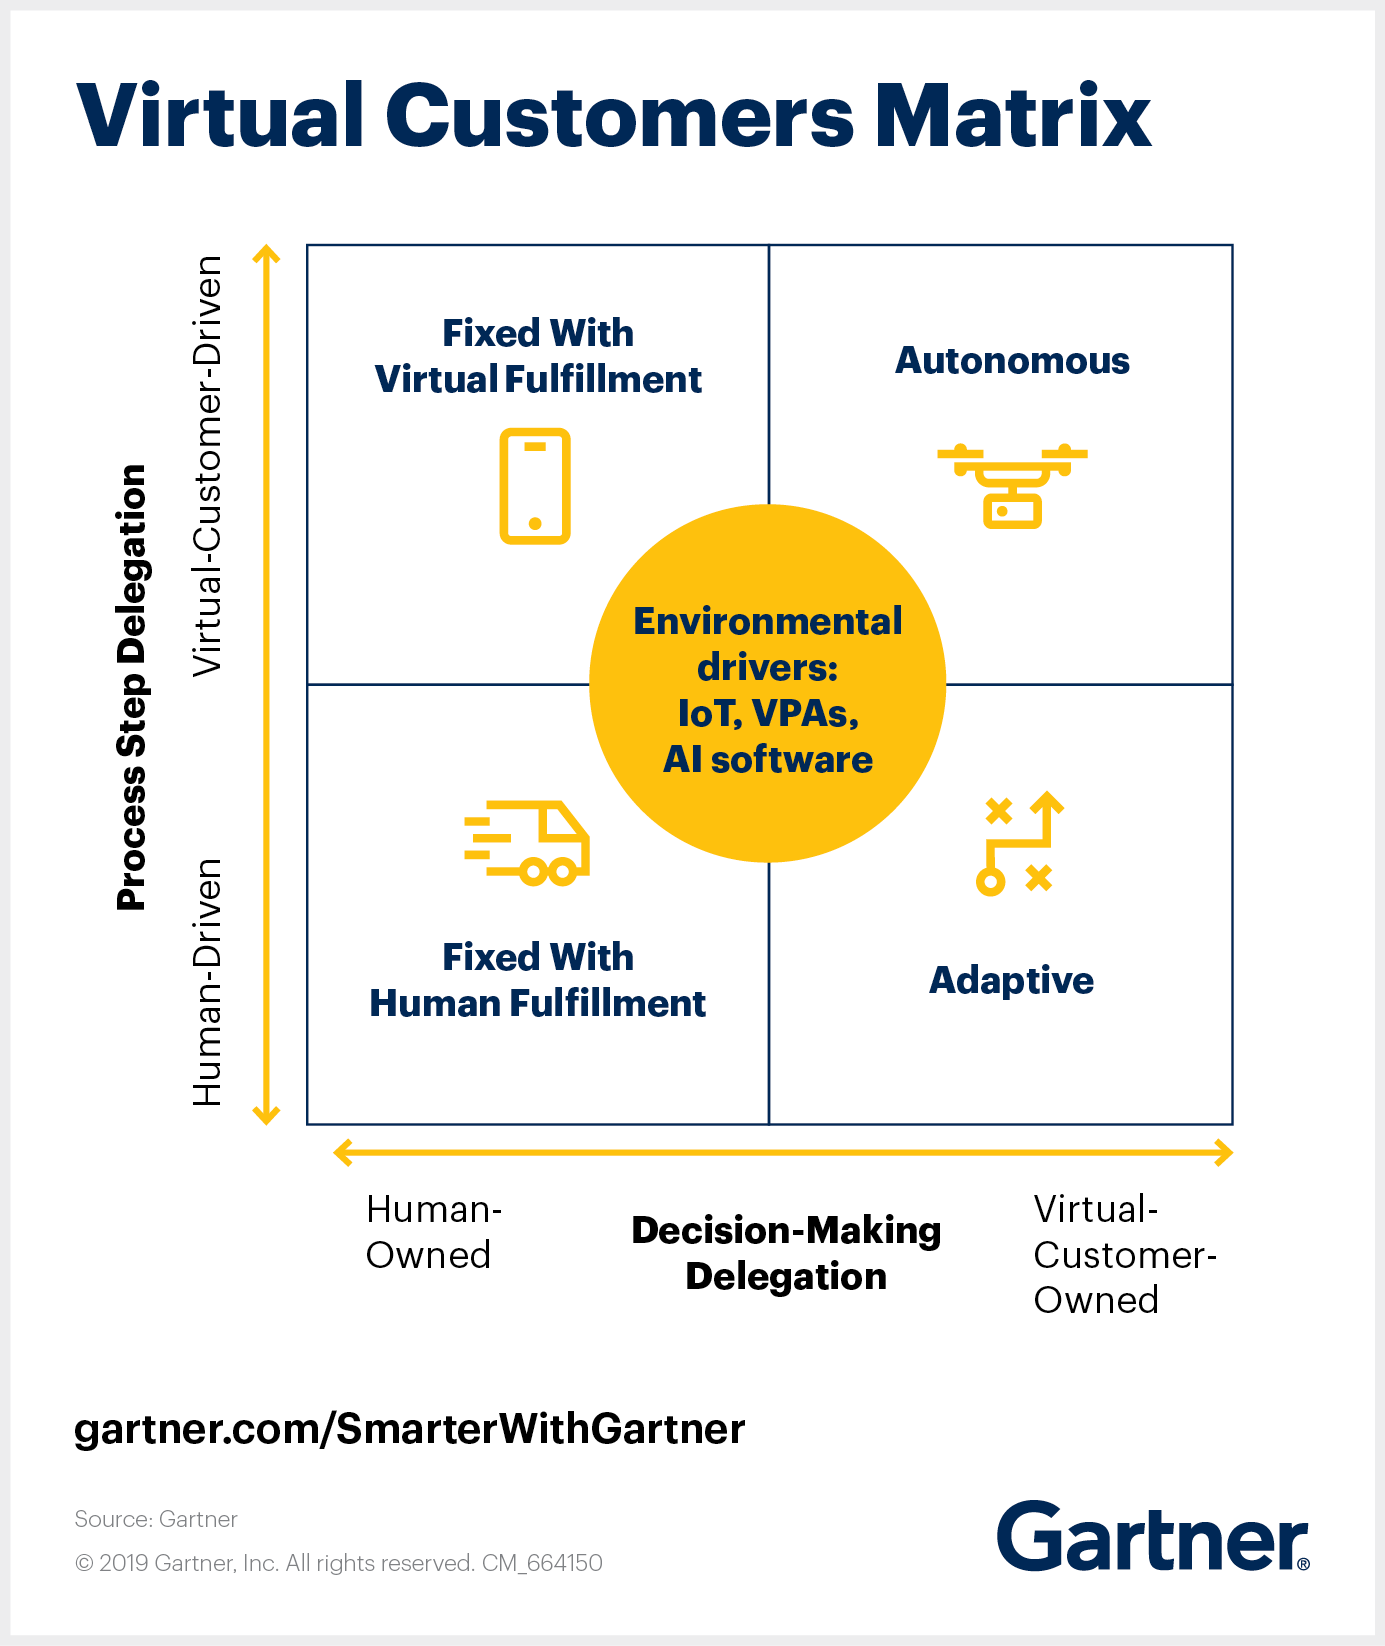 Gartner's virtual customers matrix